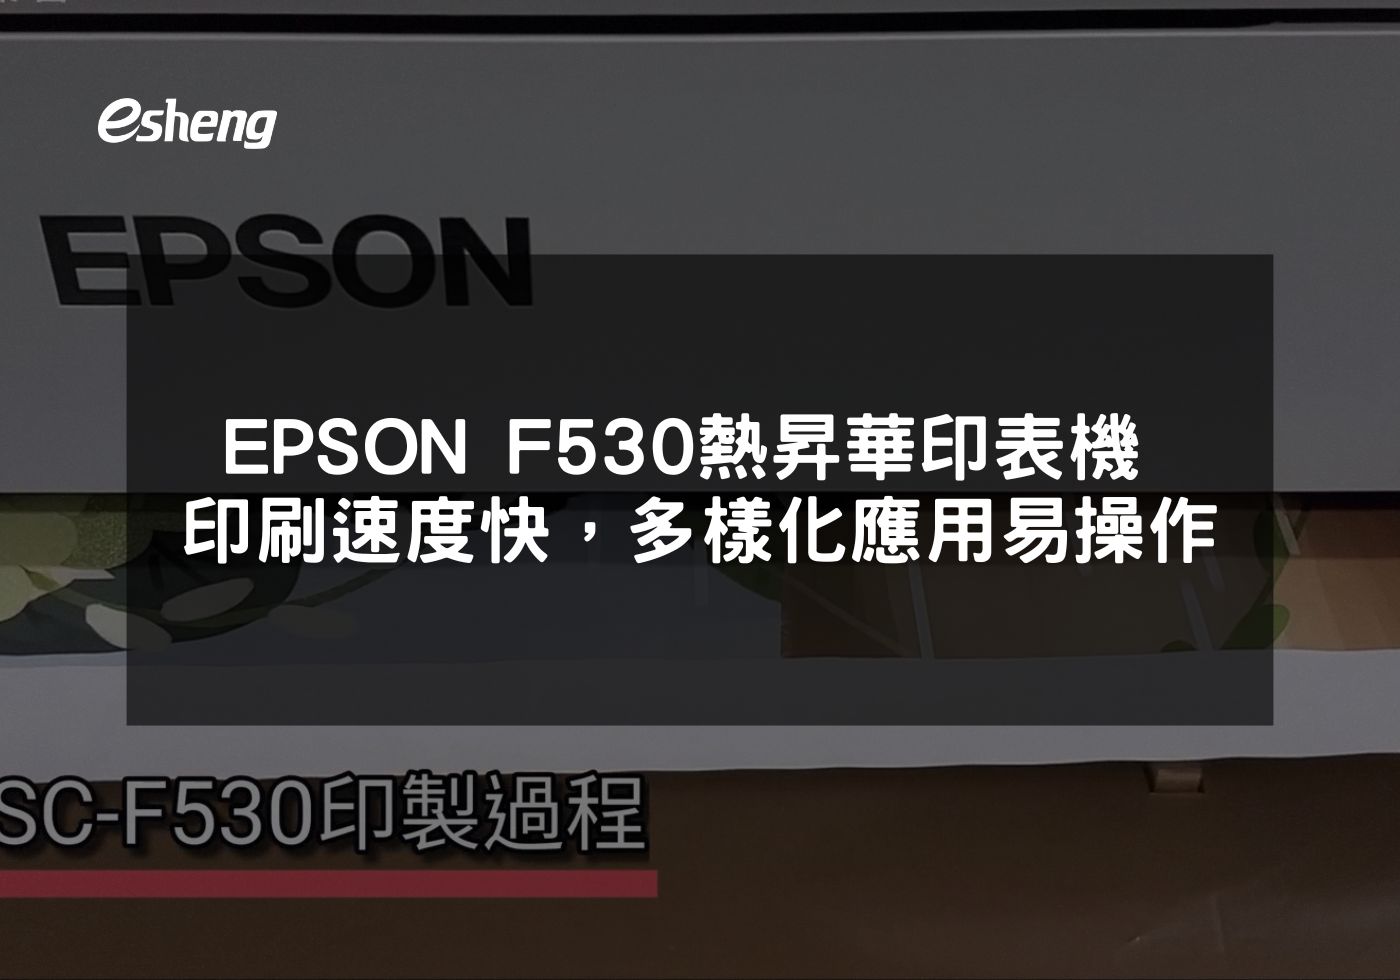 EPSON F530 熱昇華印表機 高品質印刷速度快，多樣化應用易操作